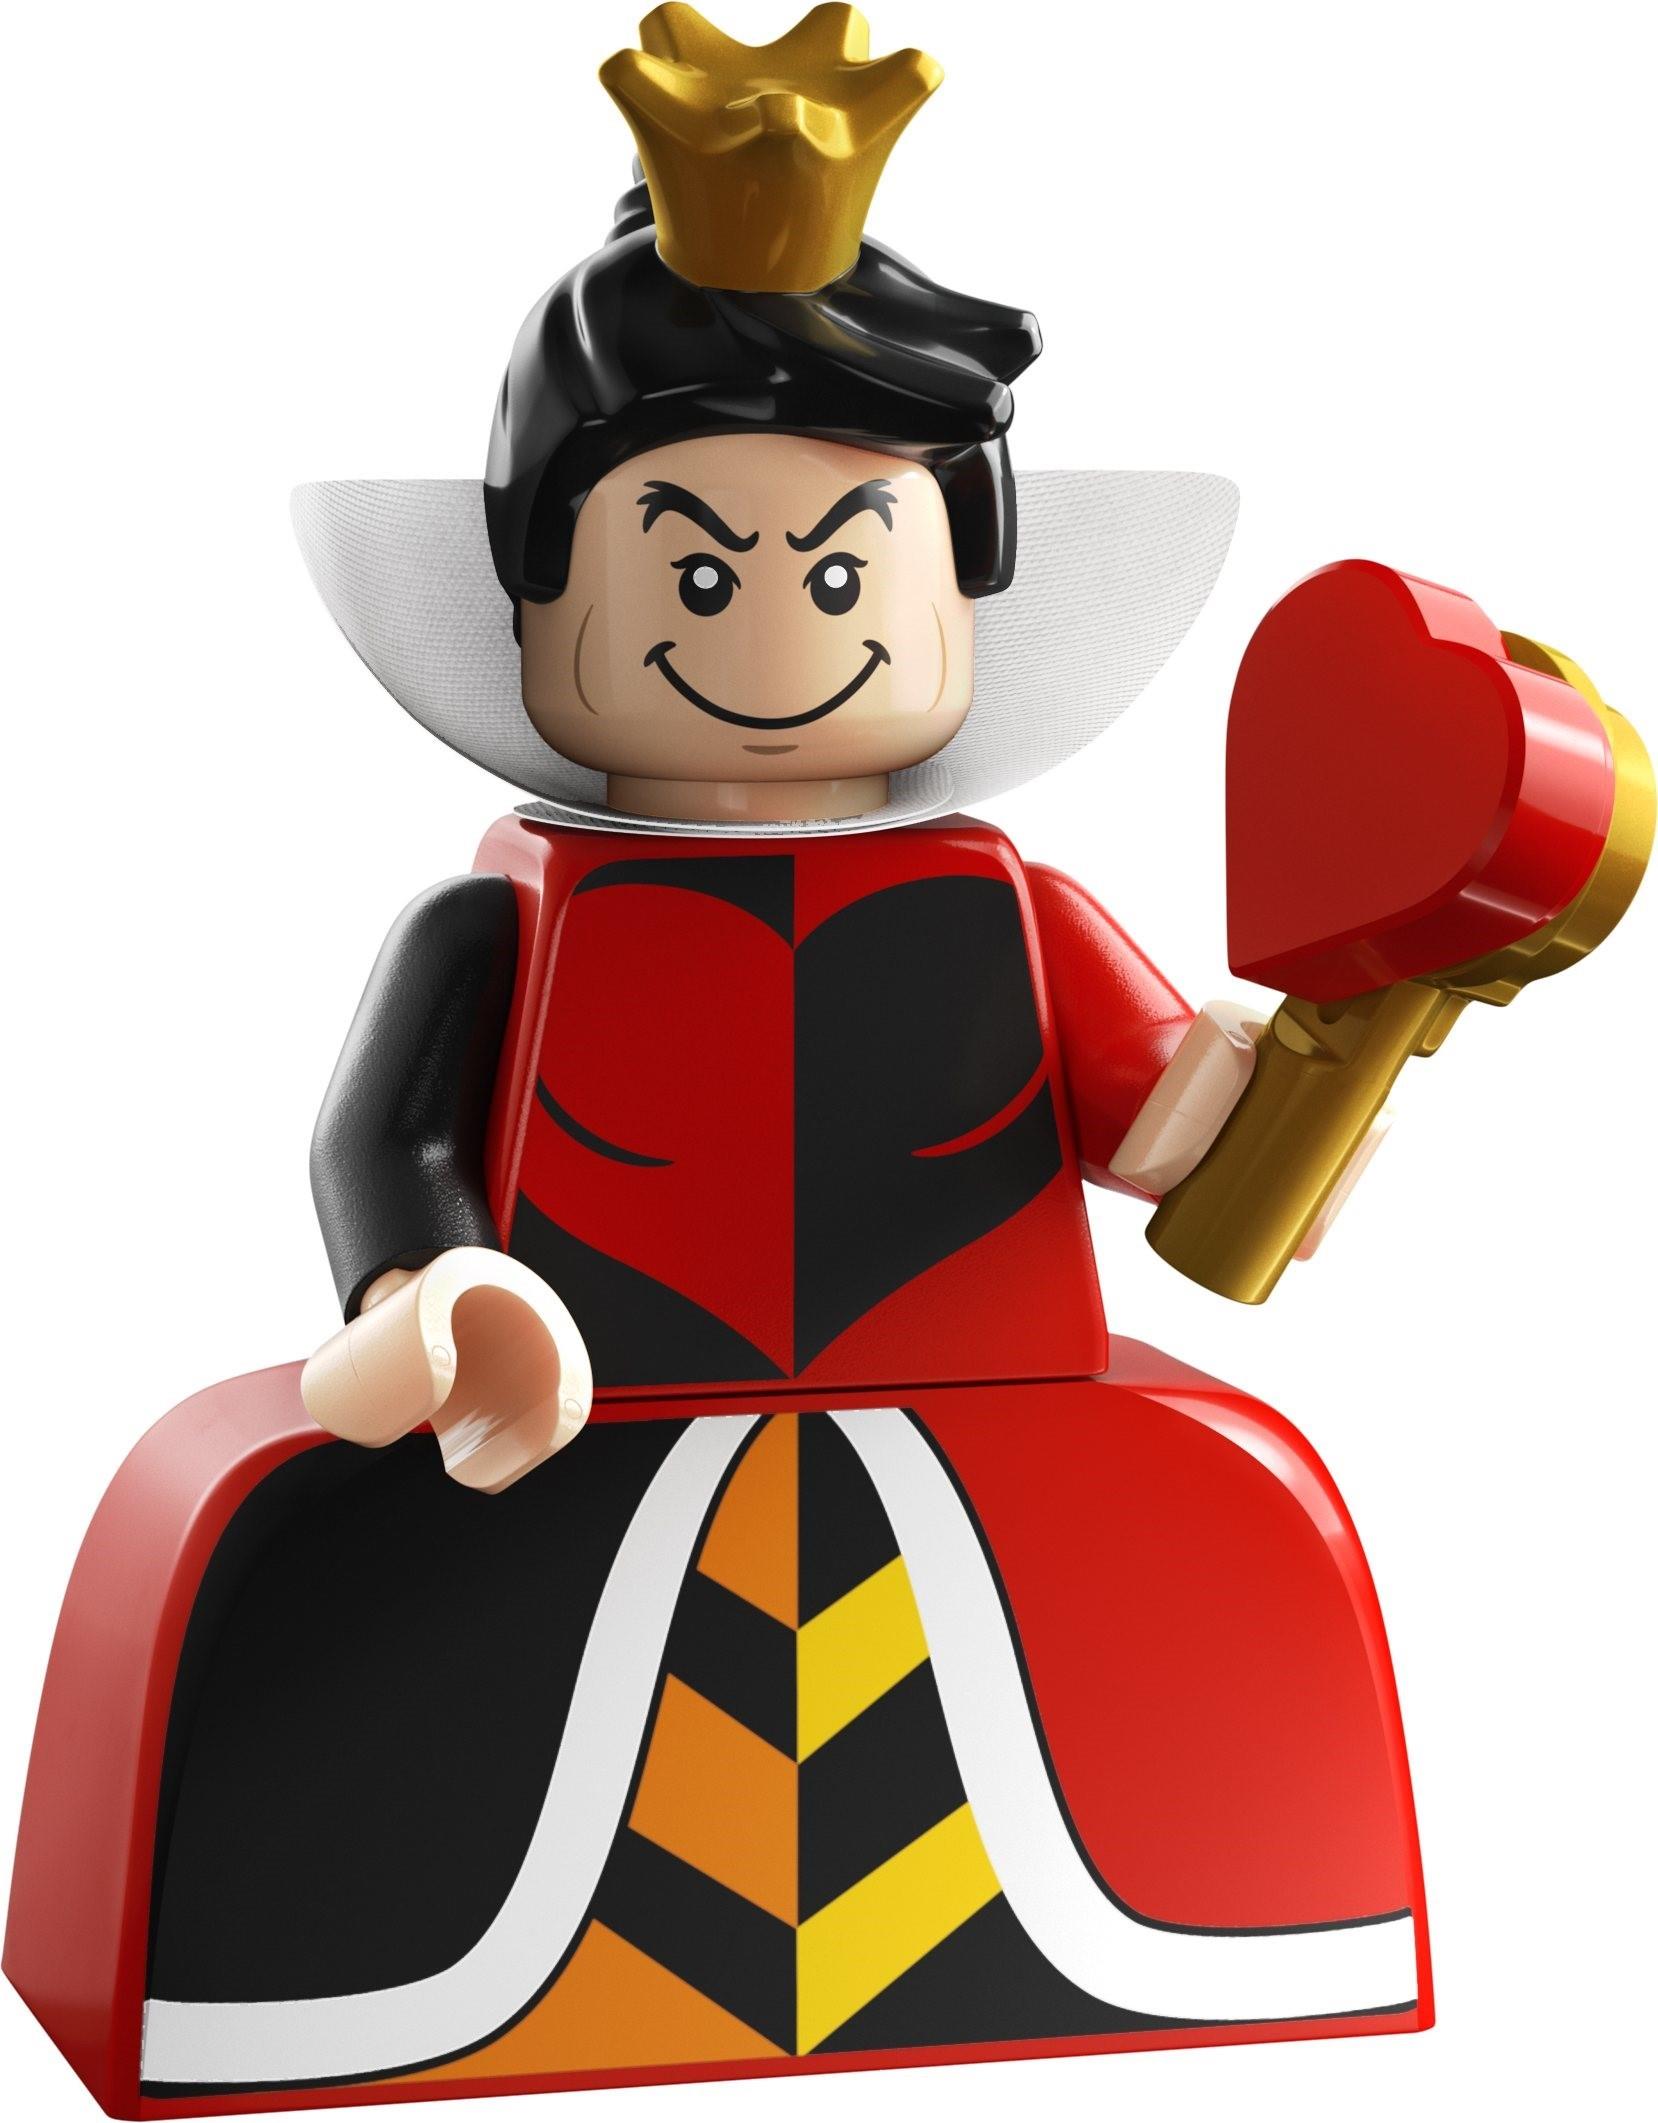 LEGO Disney Minifigures 100th Anniversary (71038) - Stitch 626